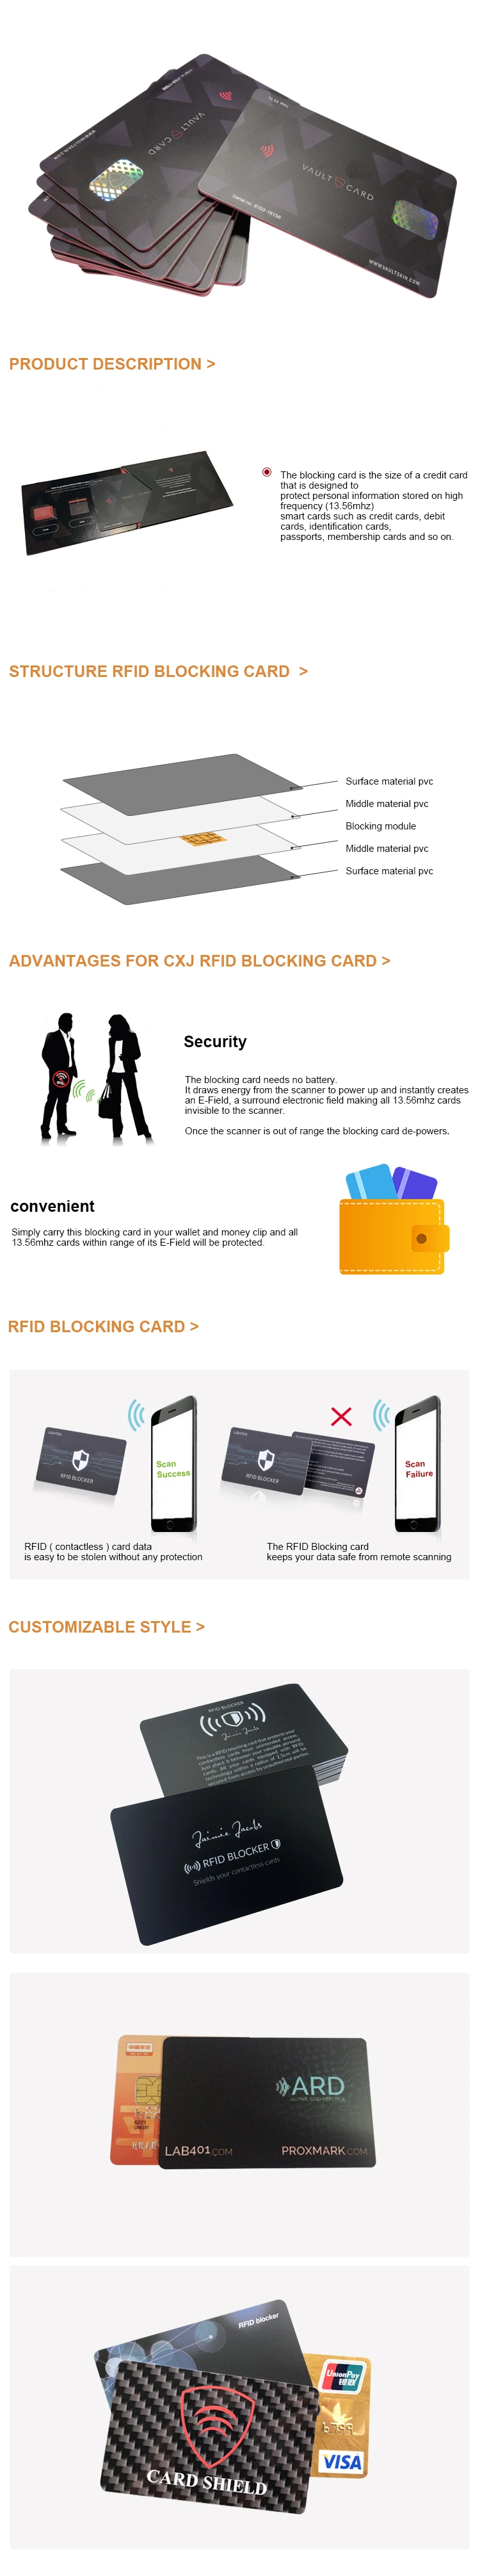 Credit Card Holder RFID Blocking RFID Blocking Card Protectors